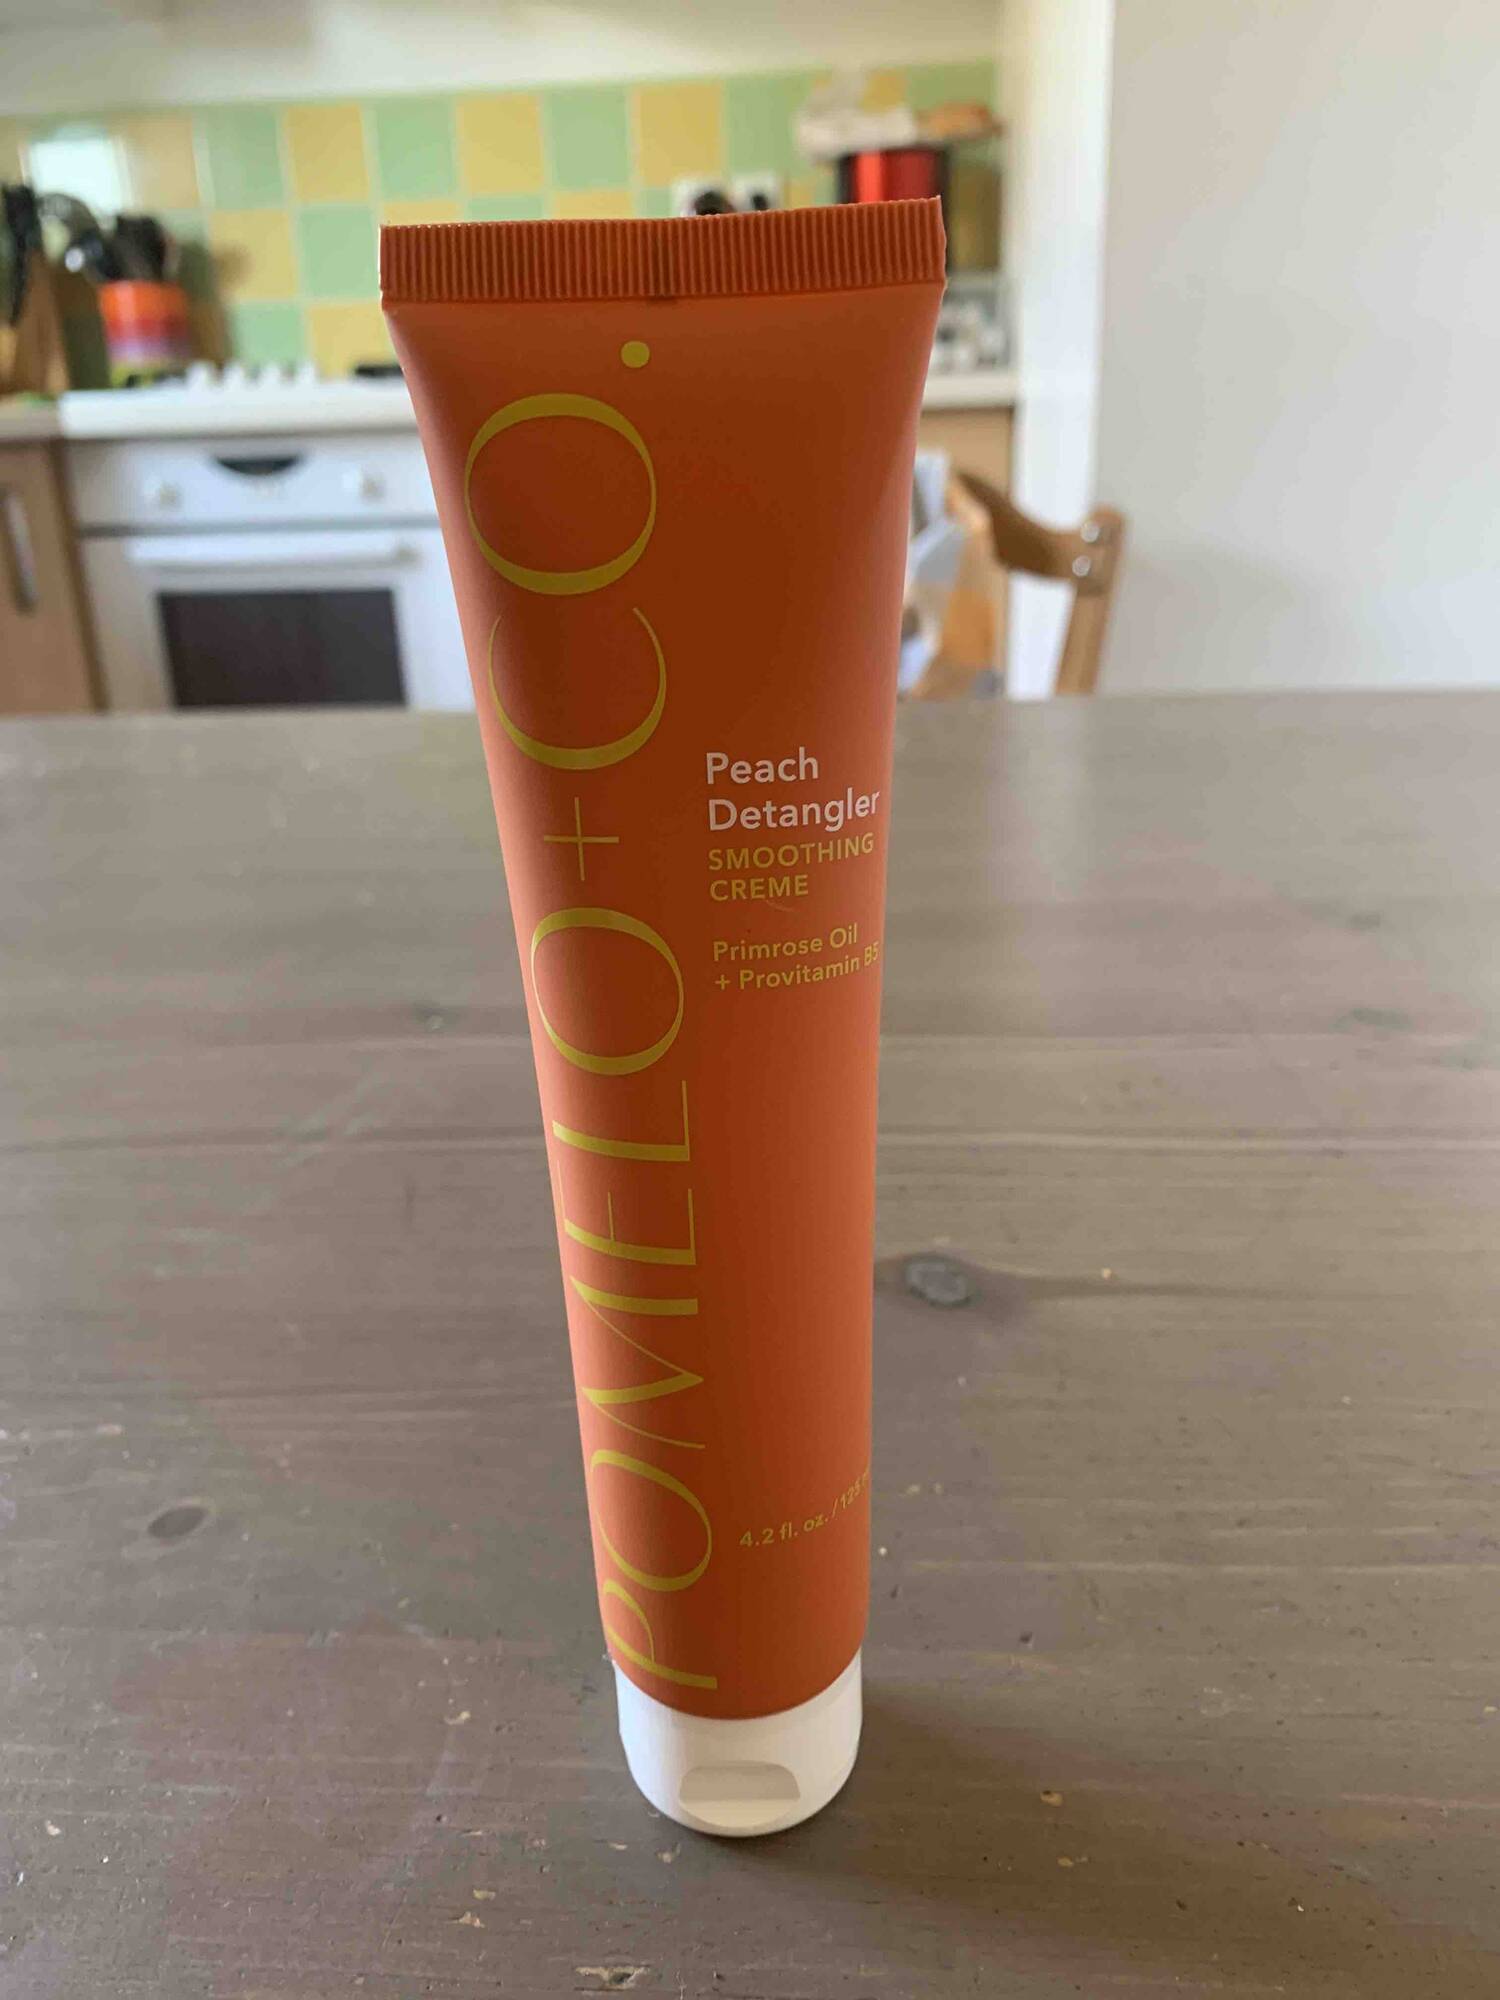 POMELO-CO - Peach detengler smoothing creme